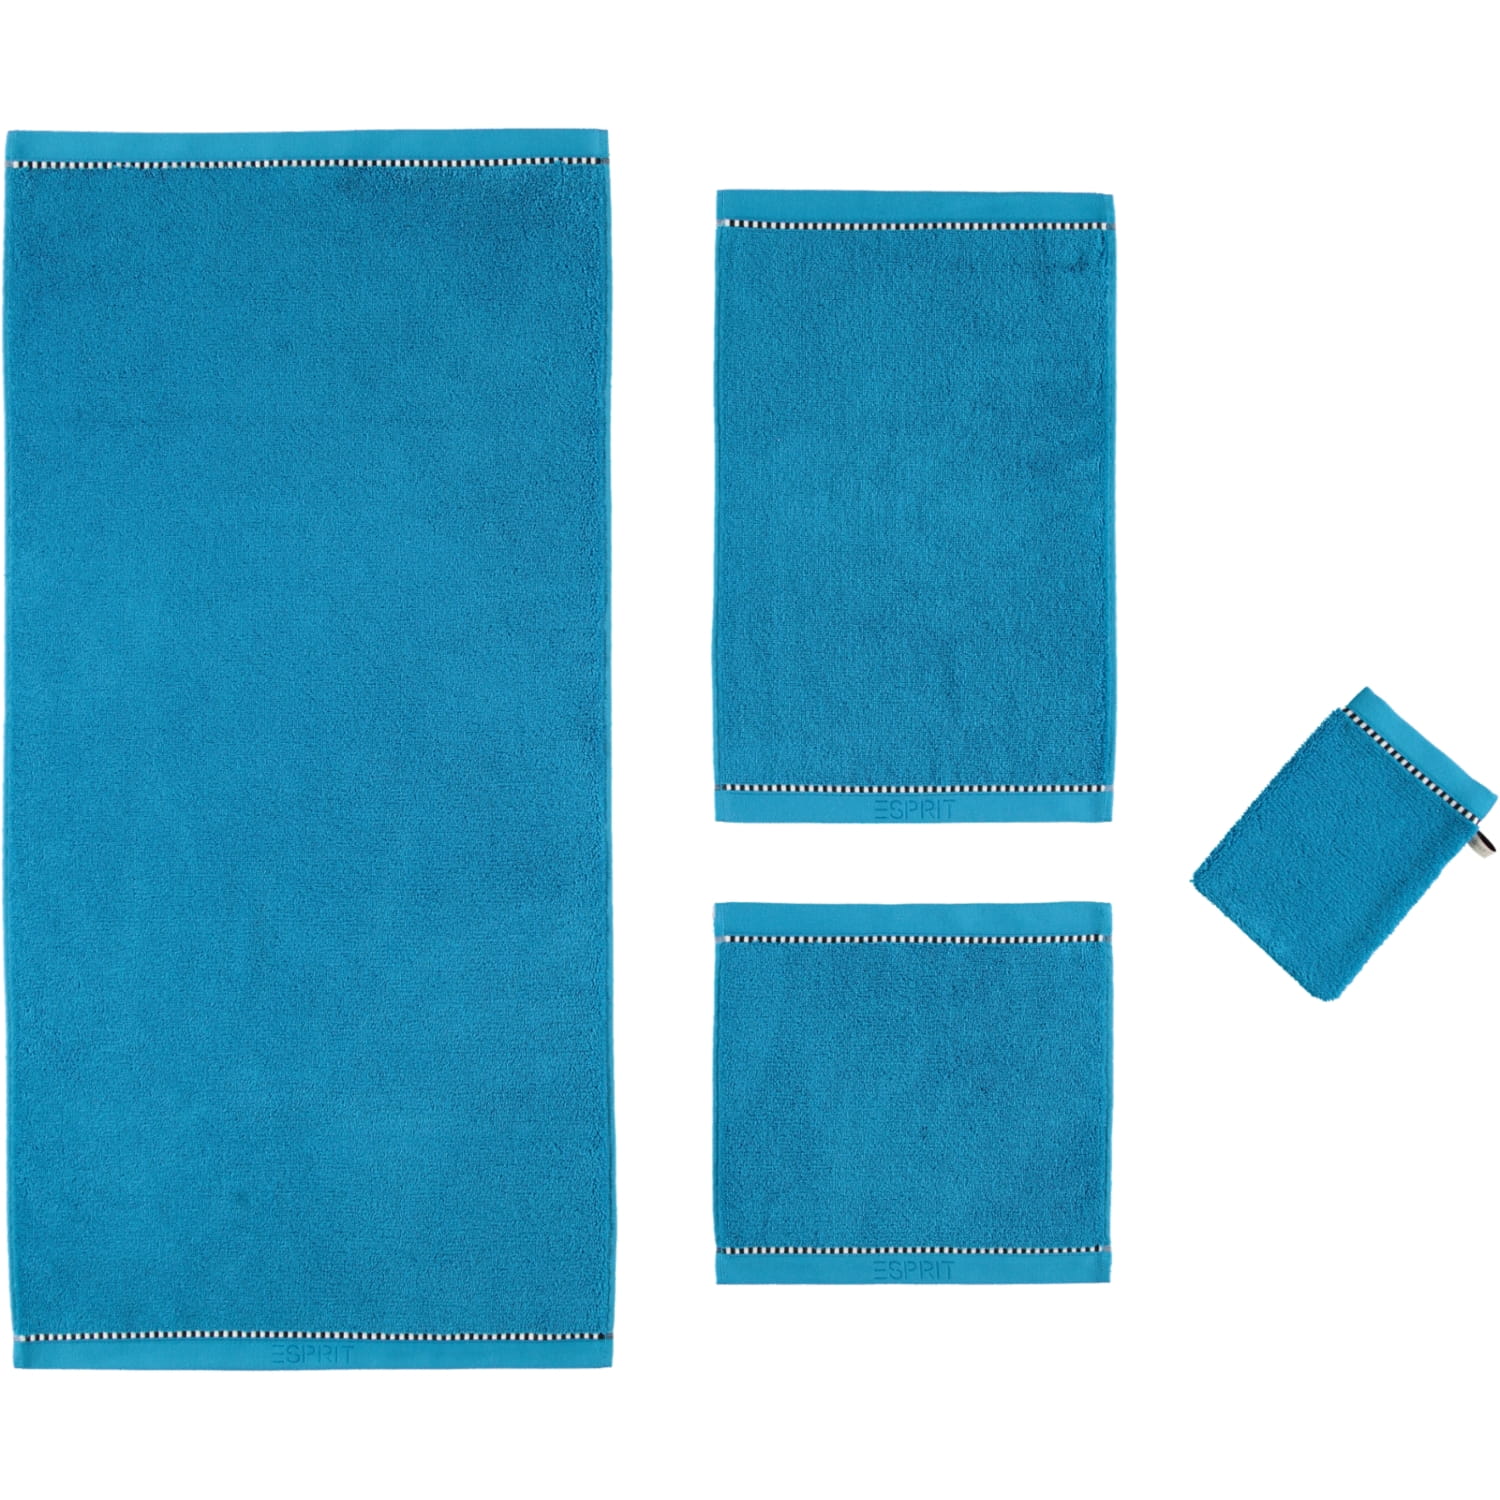 Esprit Box Solid - Farbe: 4665 | Handtücher ESPRIT | - | Marken ESPRIT blue ocean